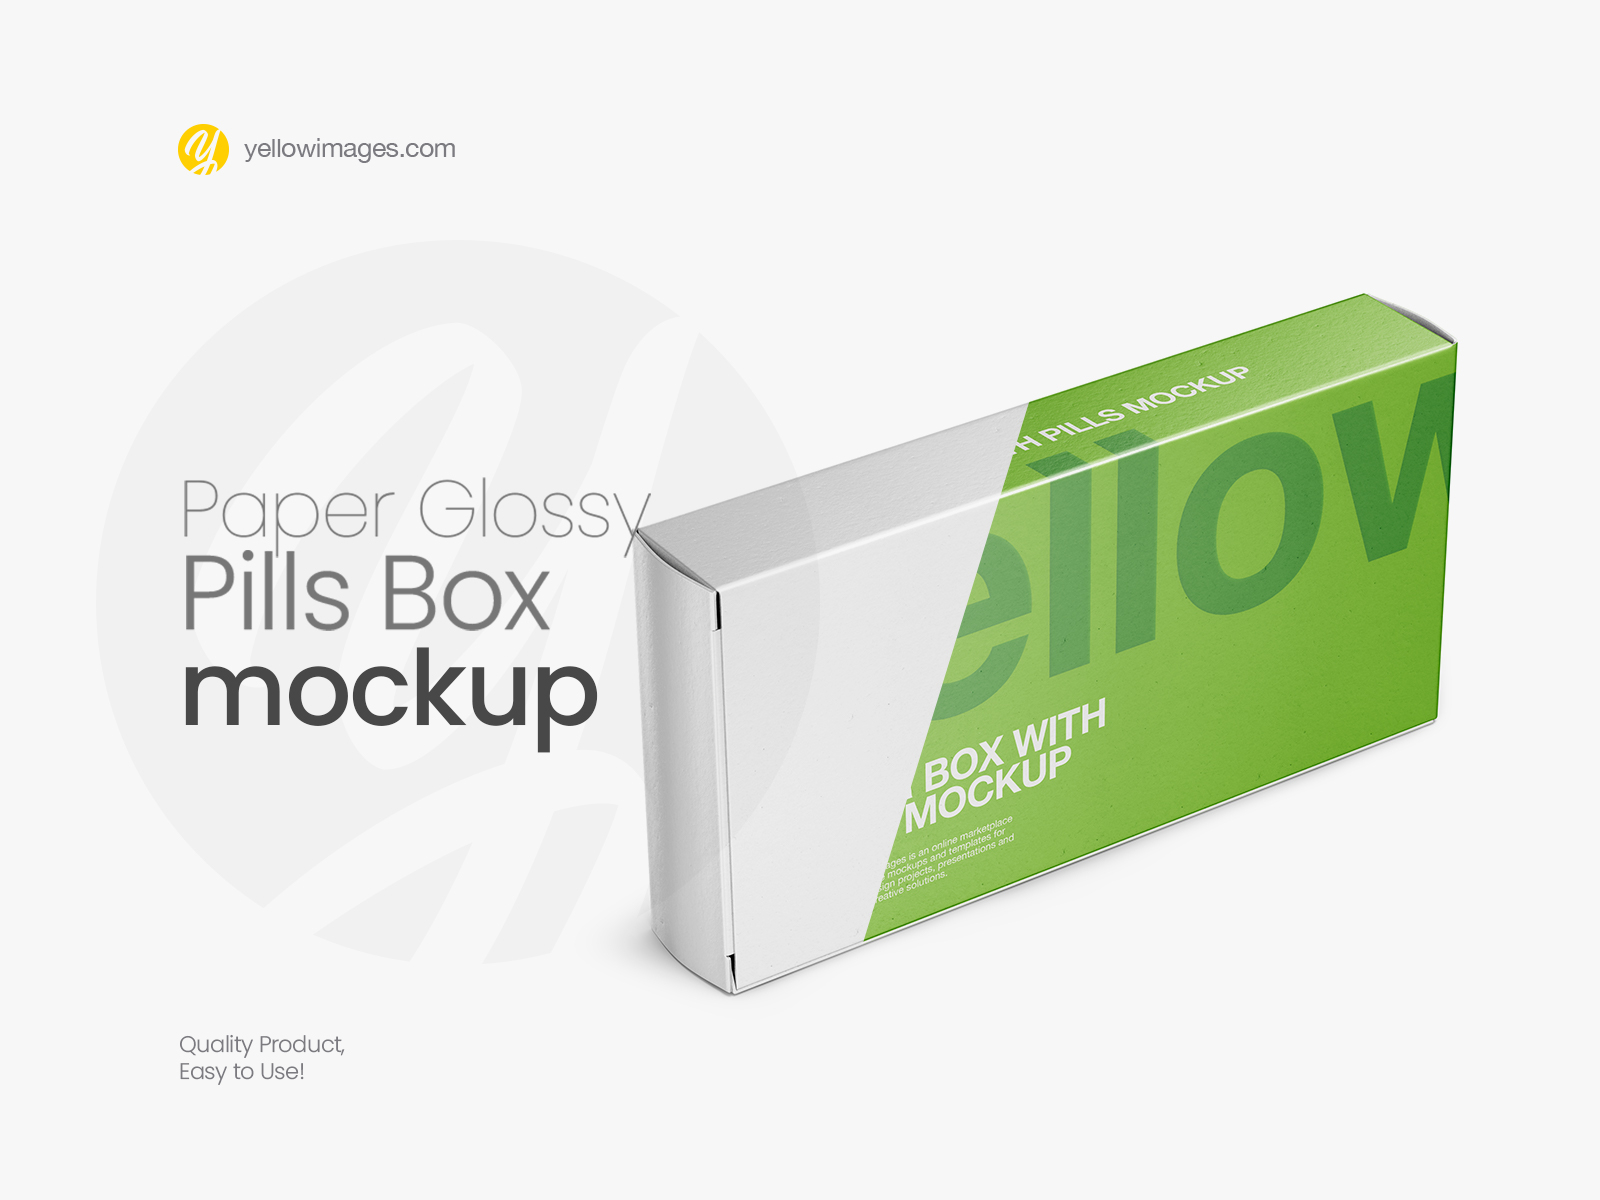 Download Glossy Metallic Pills Box Mockup Half Side View By Dmytro Ovcharenko On Dribbble Yellowimages Mockups